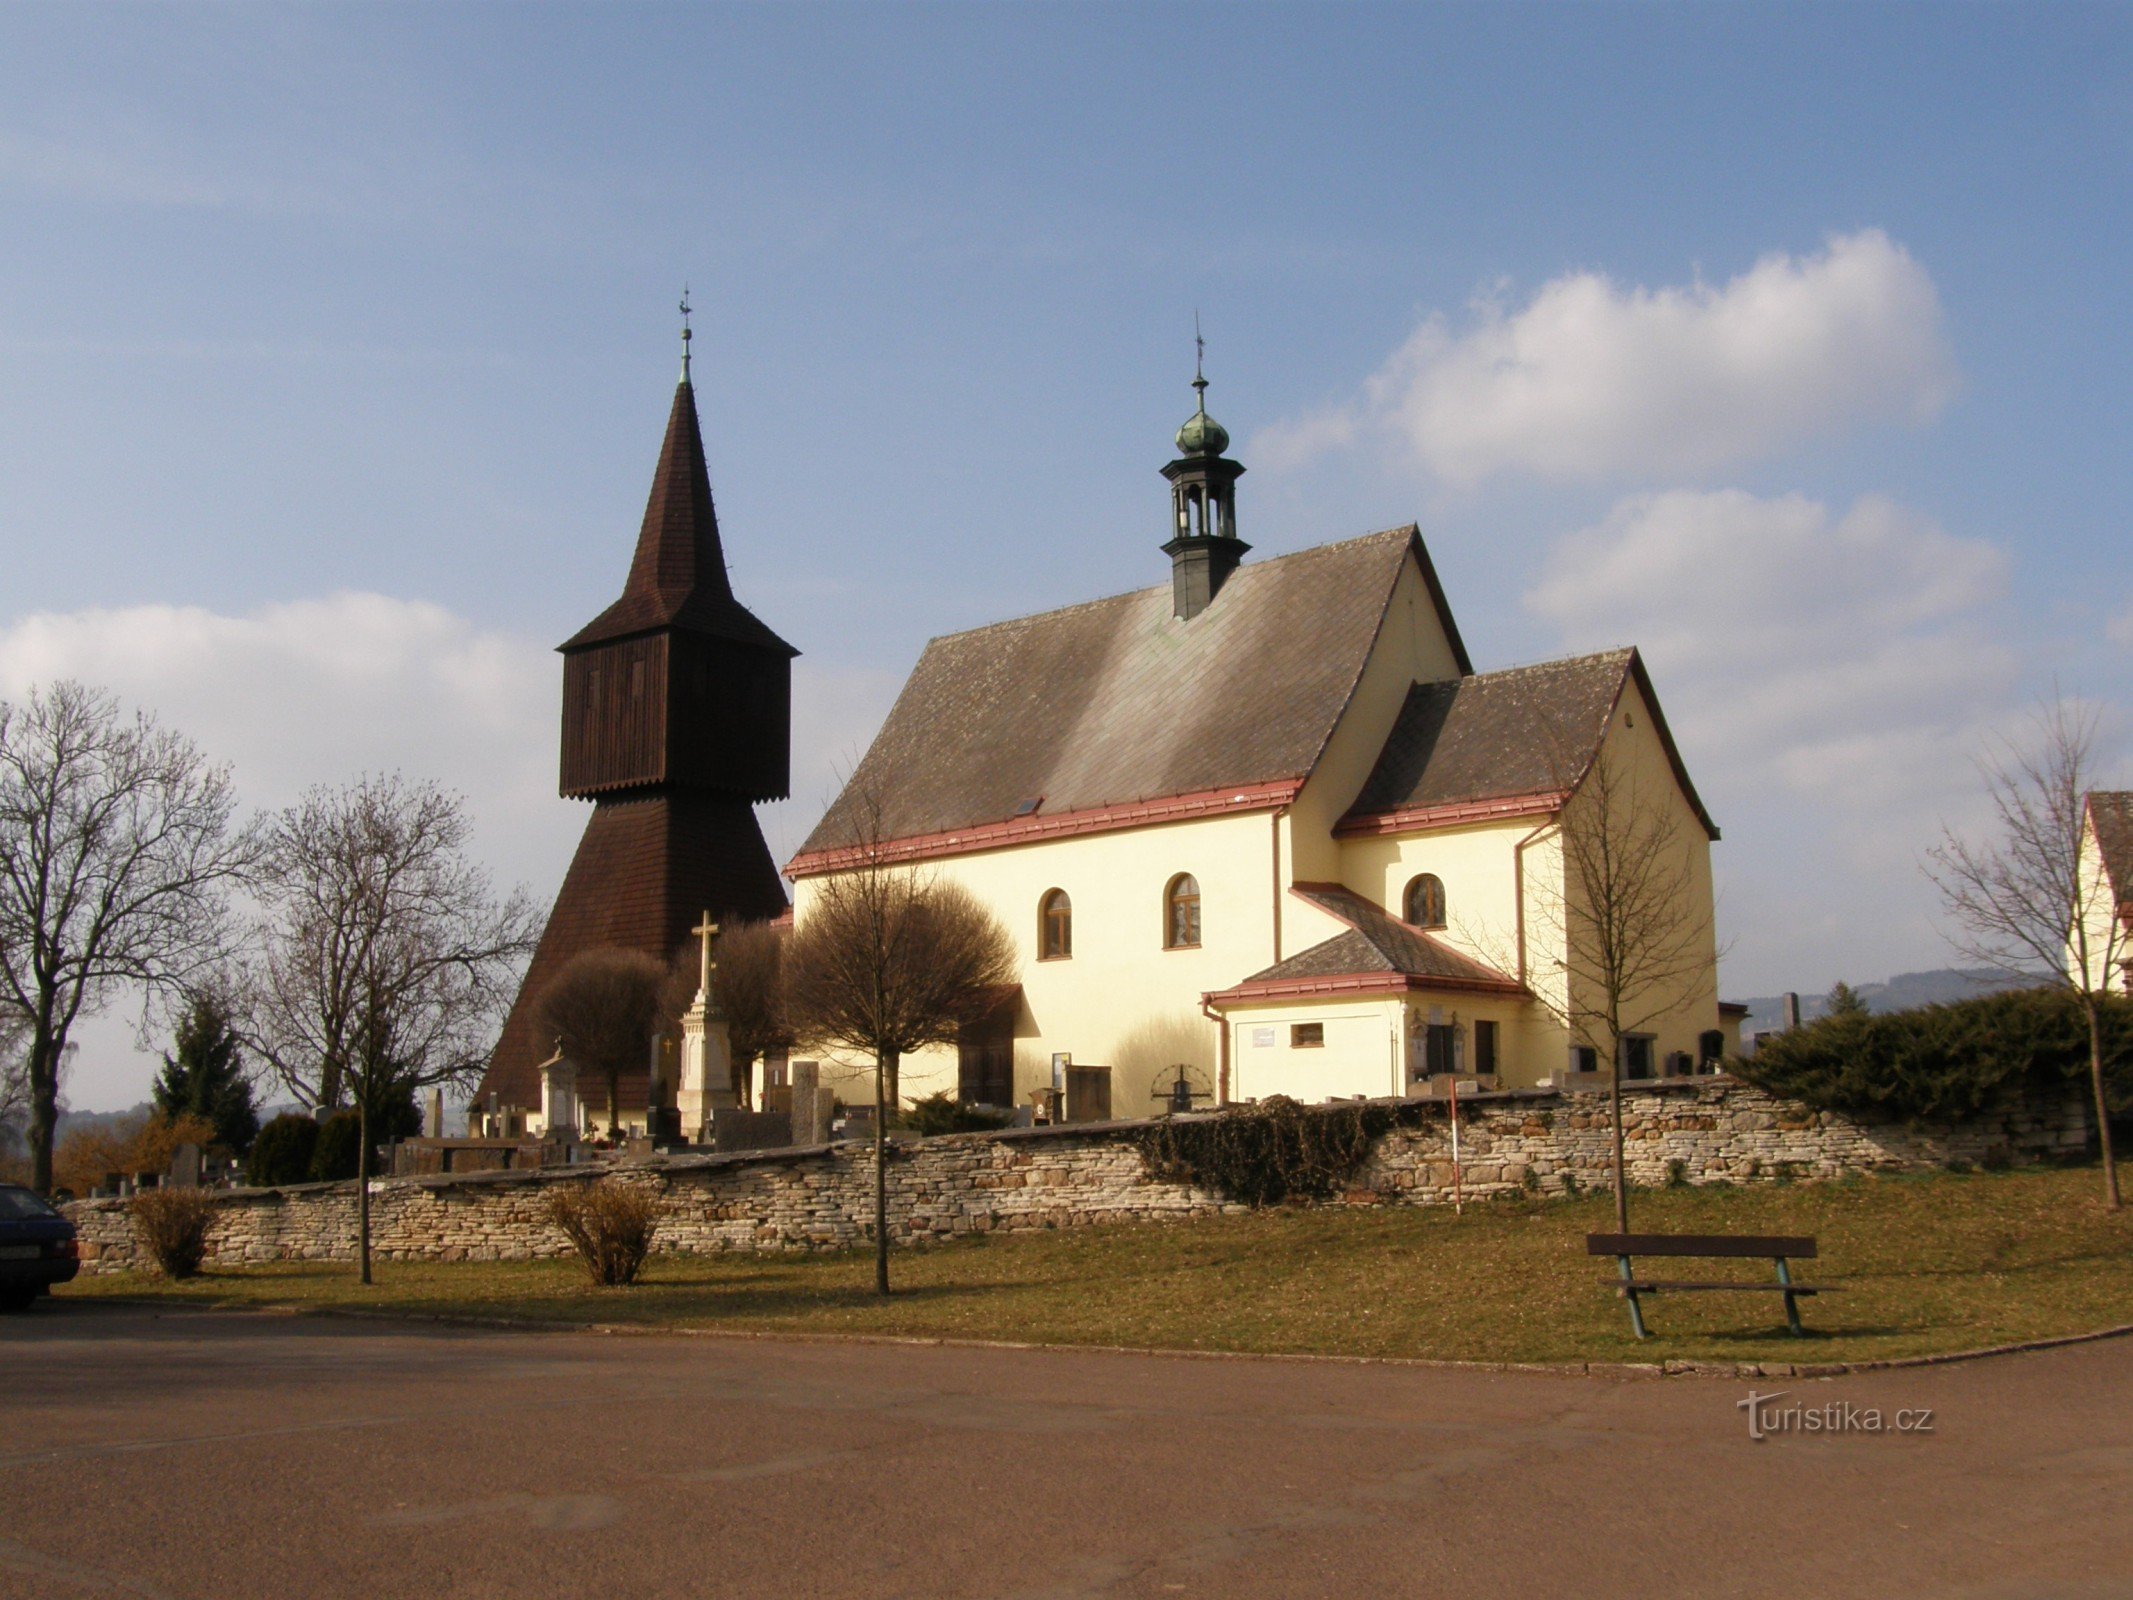 Rtyně in Podkrkonoší - kerk en klokkentoren